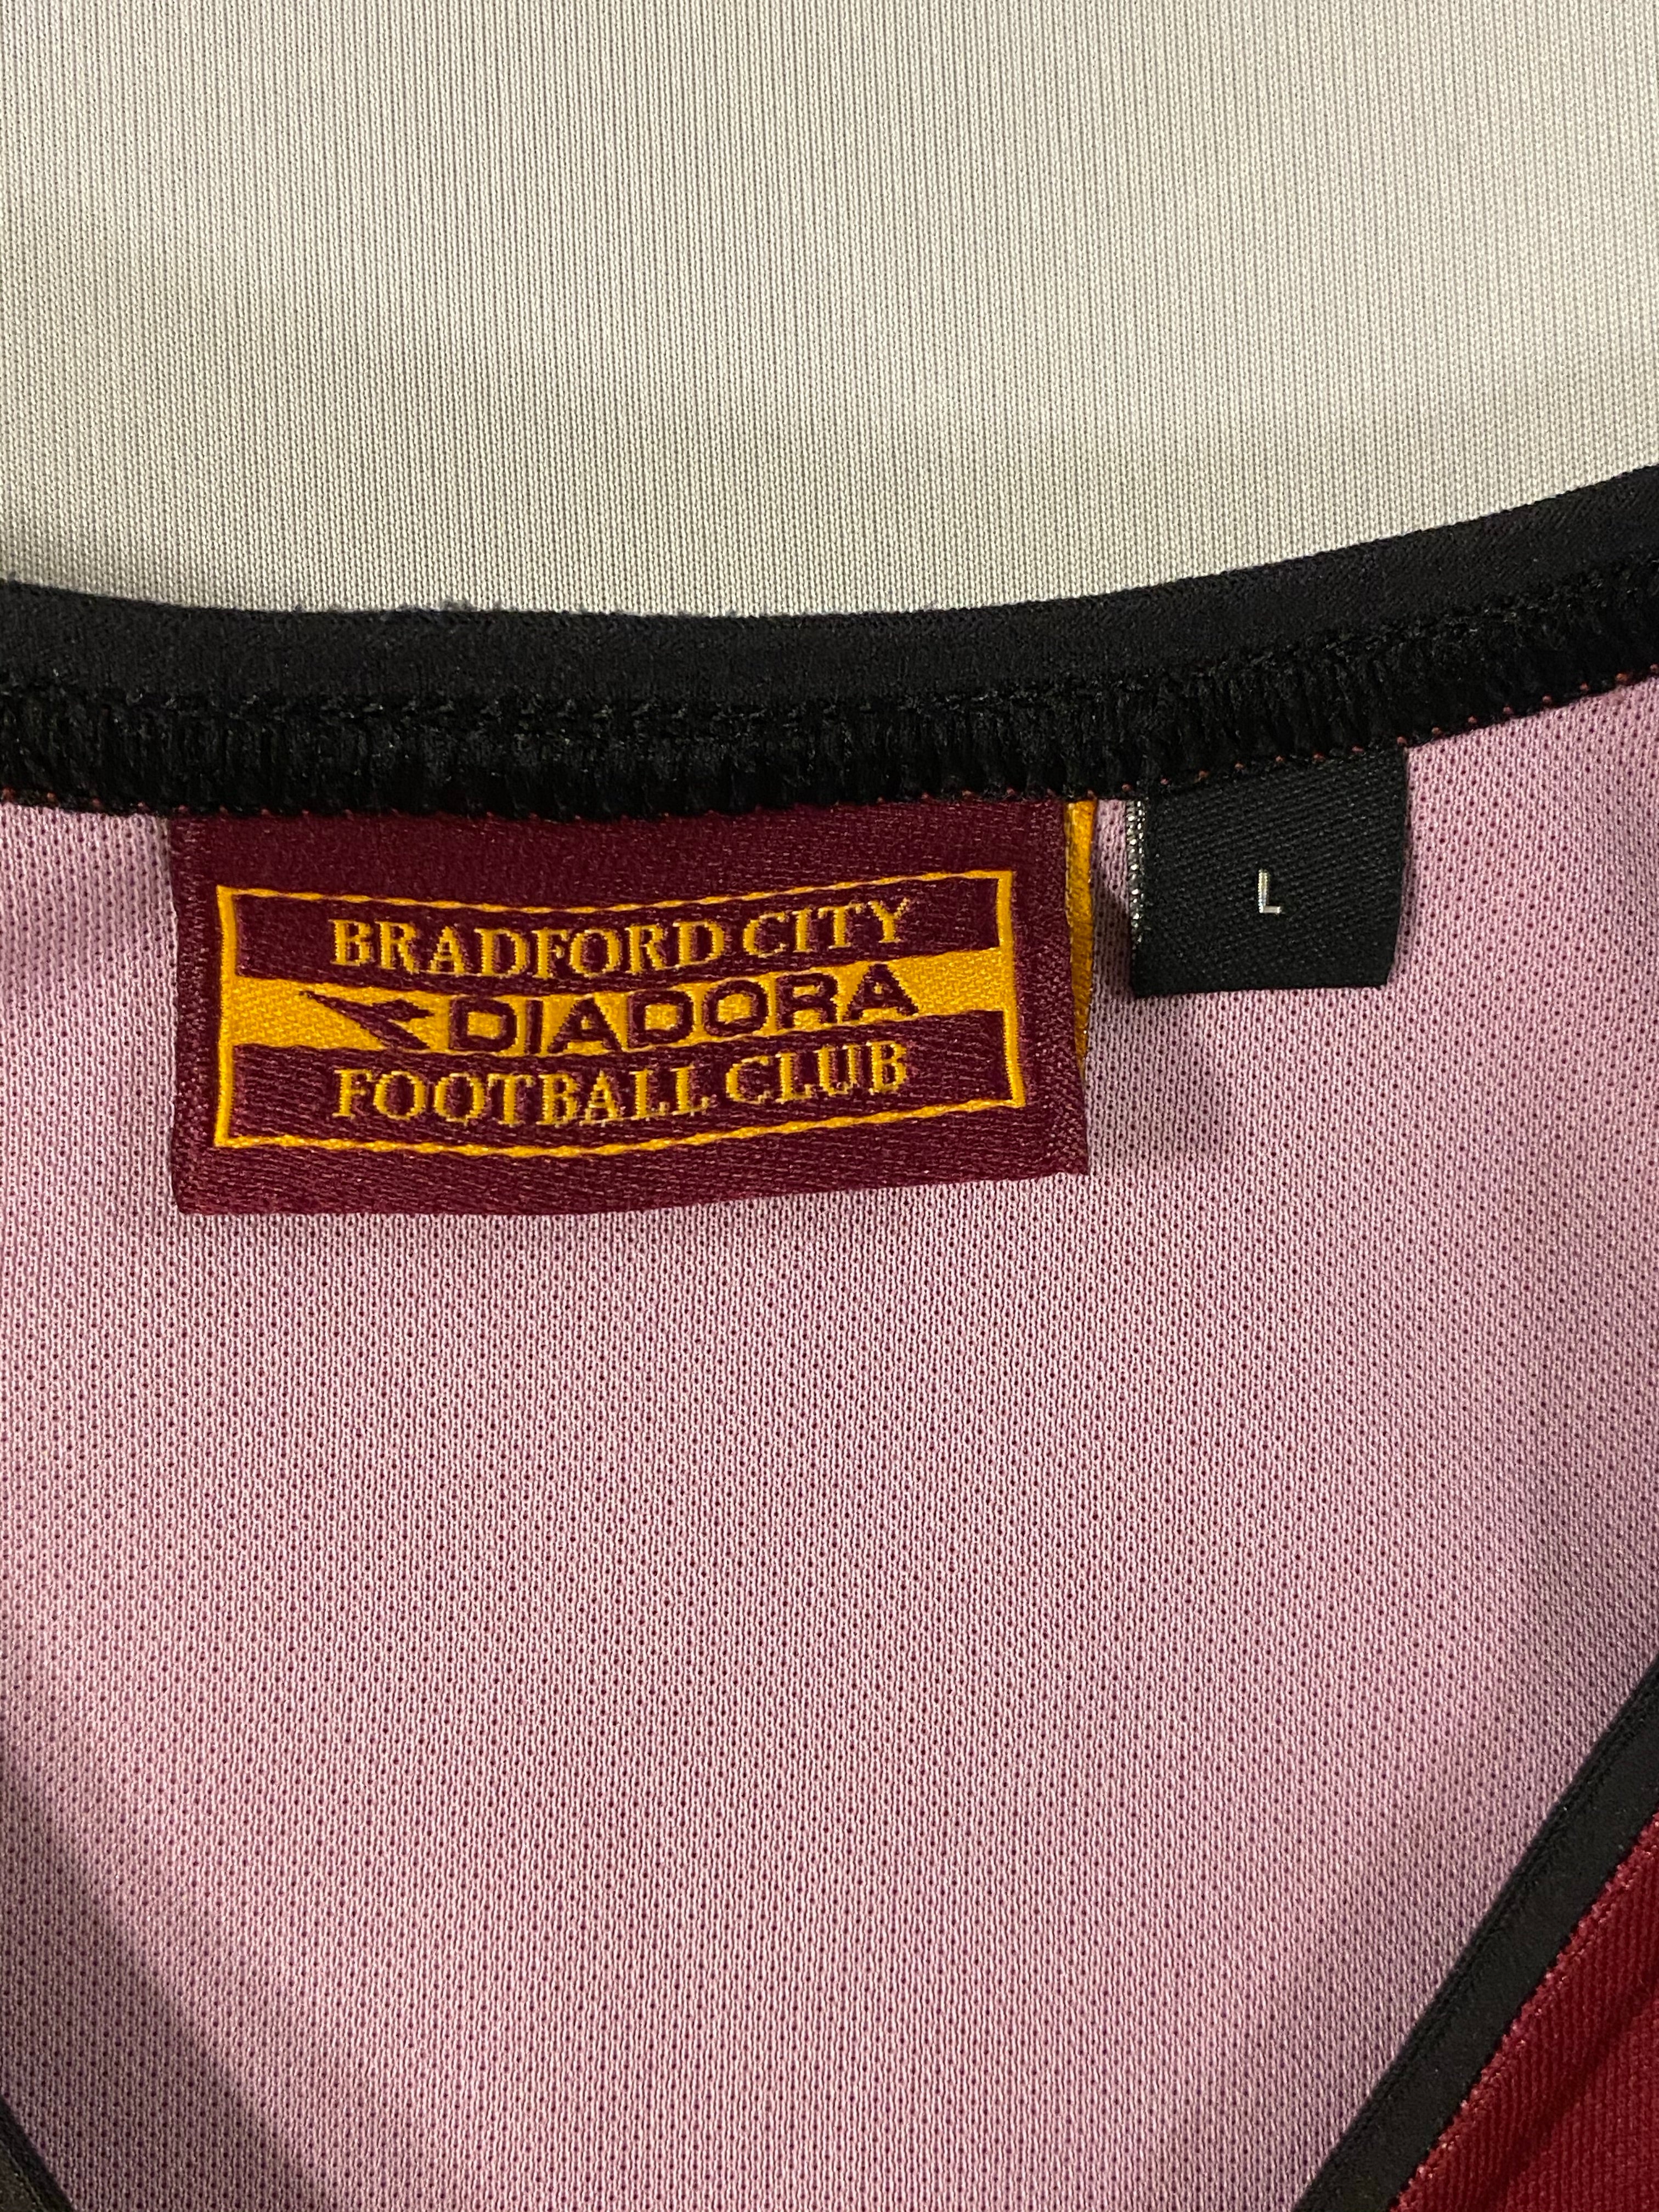 2003/04 Camiseta local del Centenario del Bradford City L / S (L) 8/10